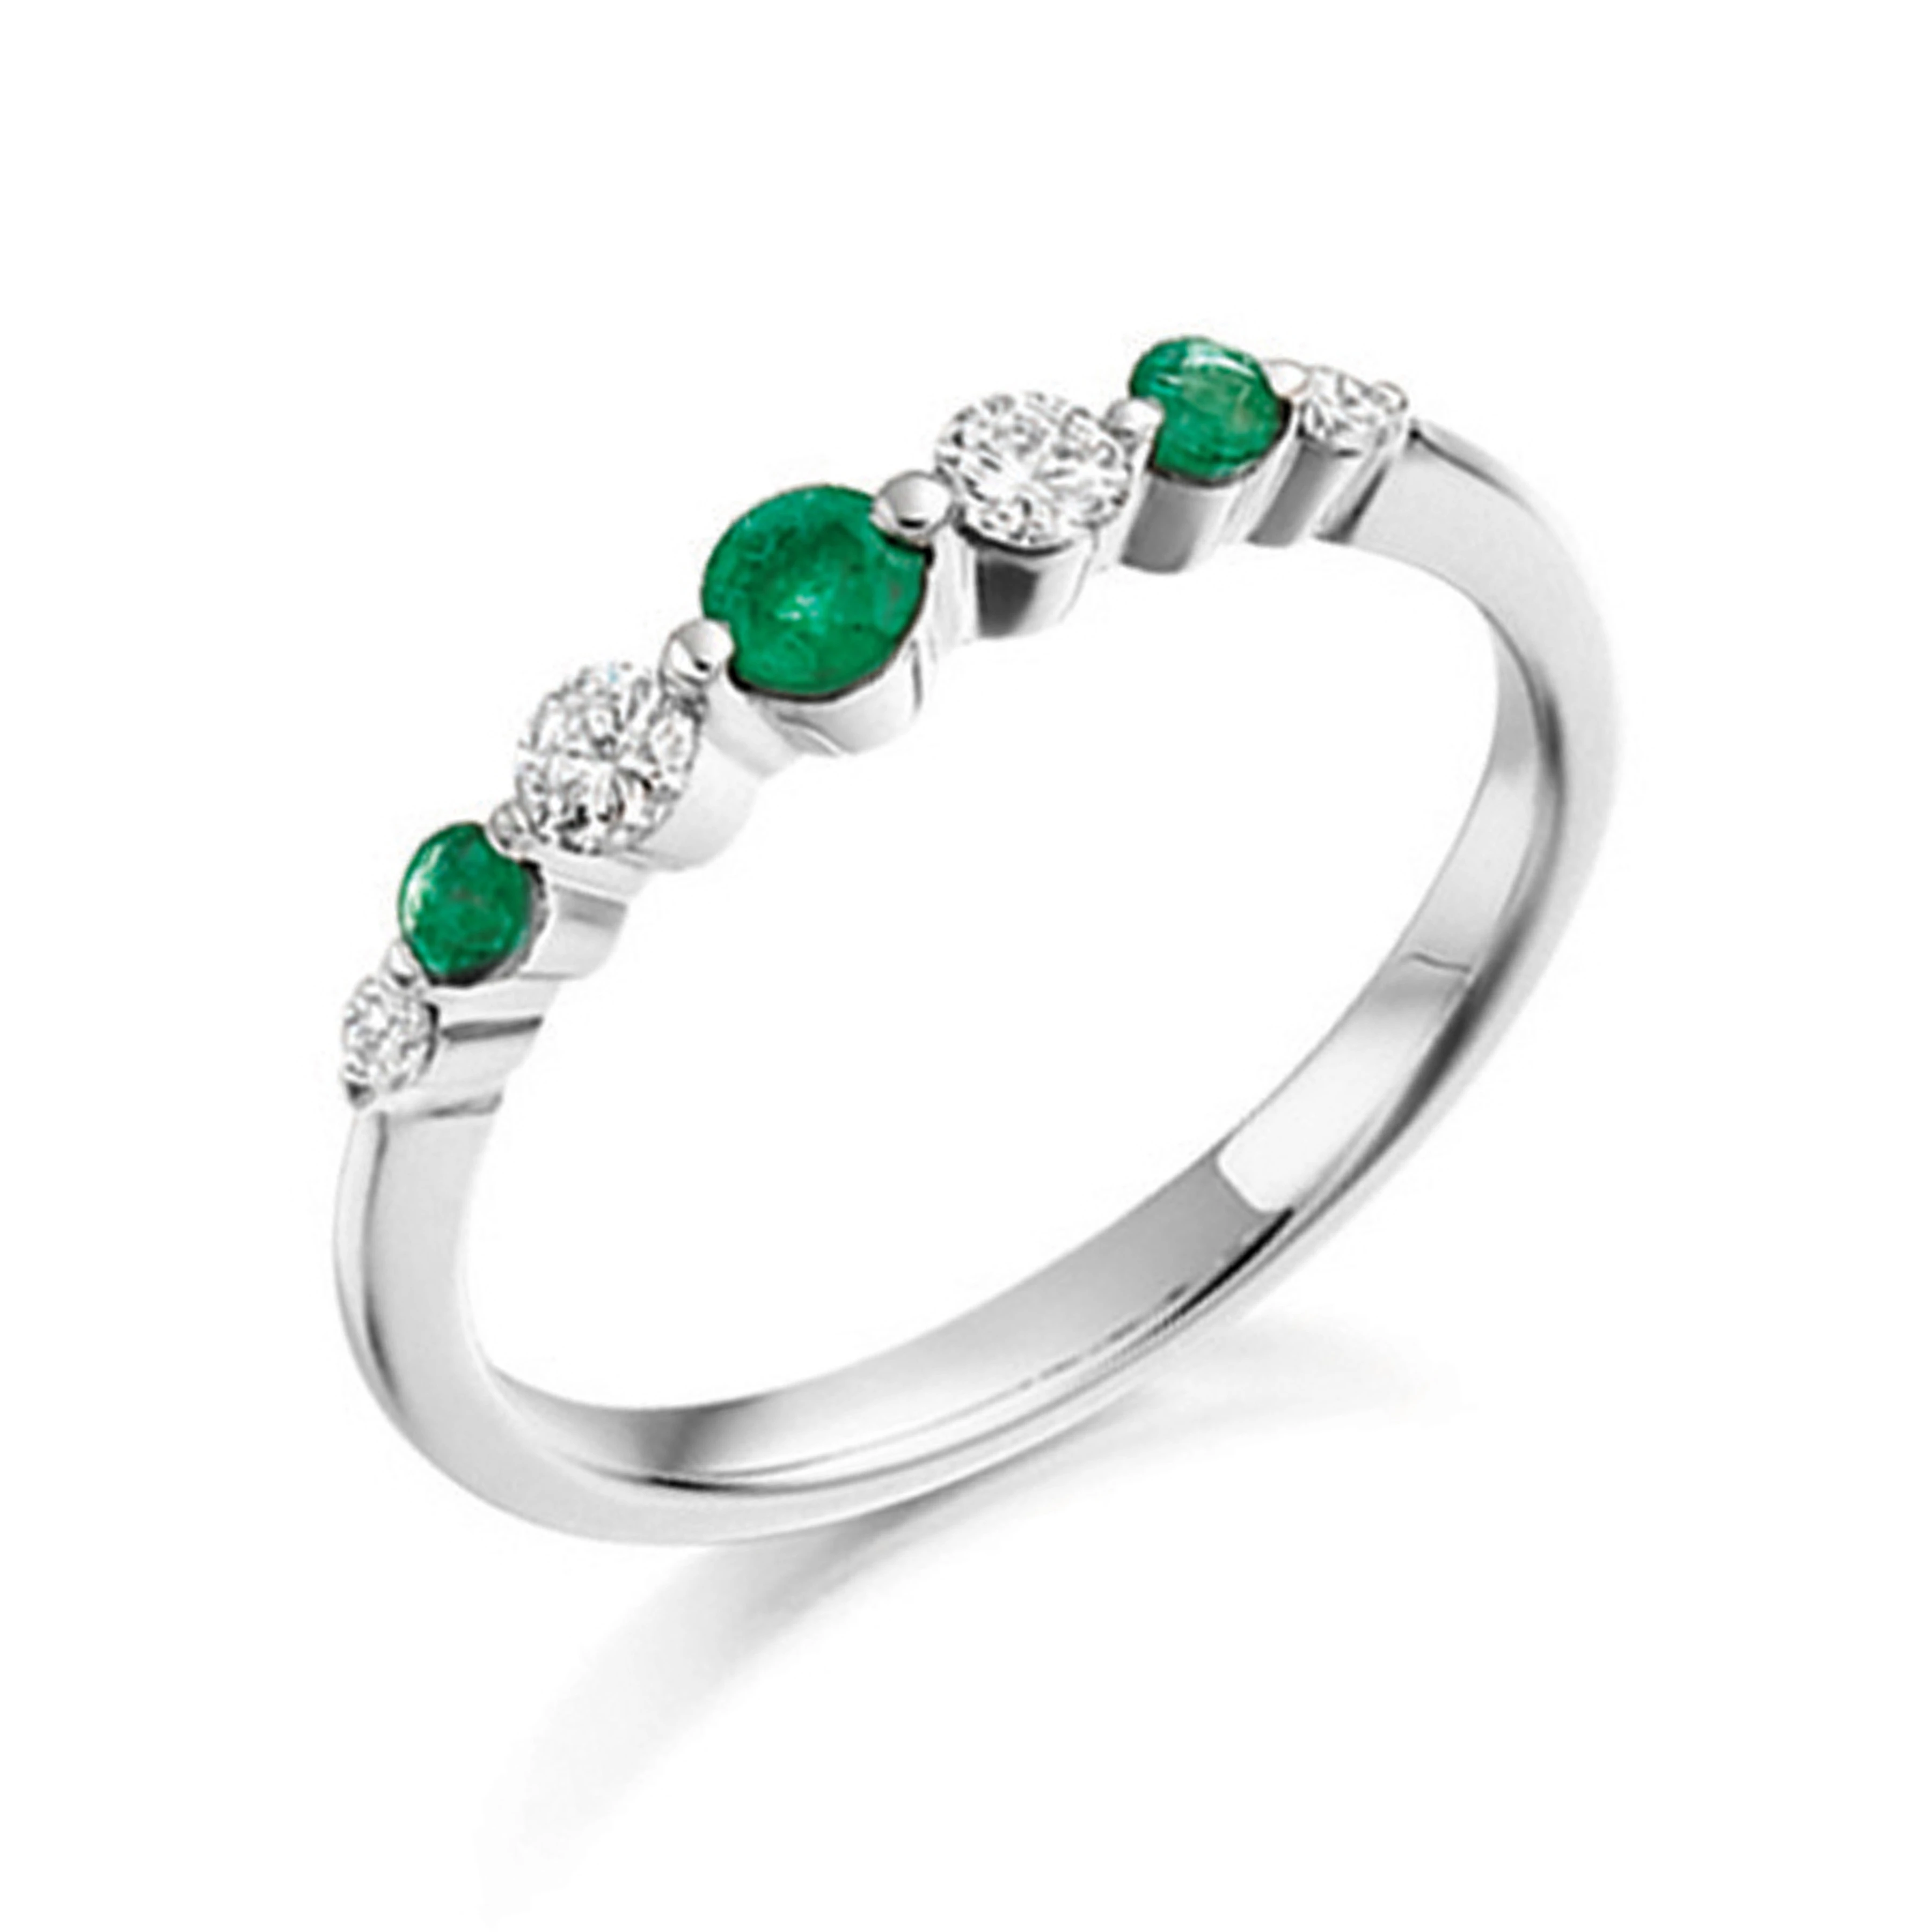 4mm,3mm Round Emerald Seven Stone Diamond And Gemstone Ring